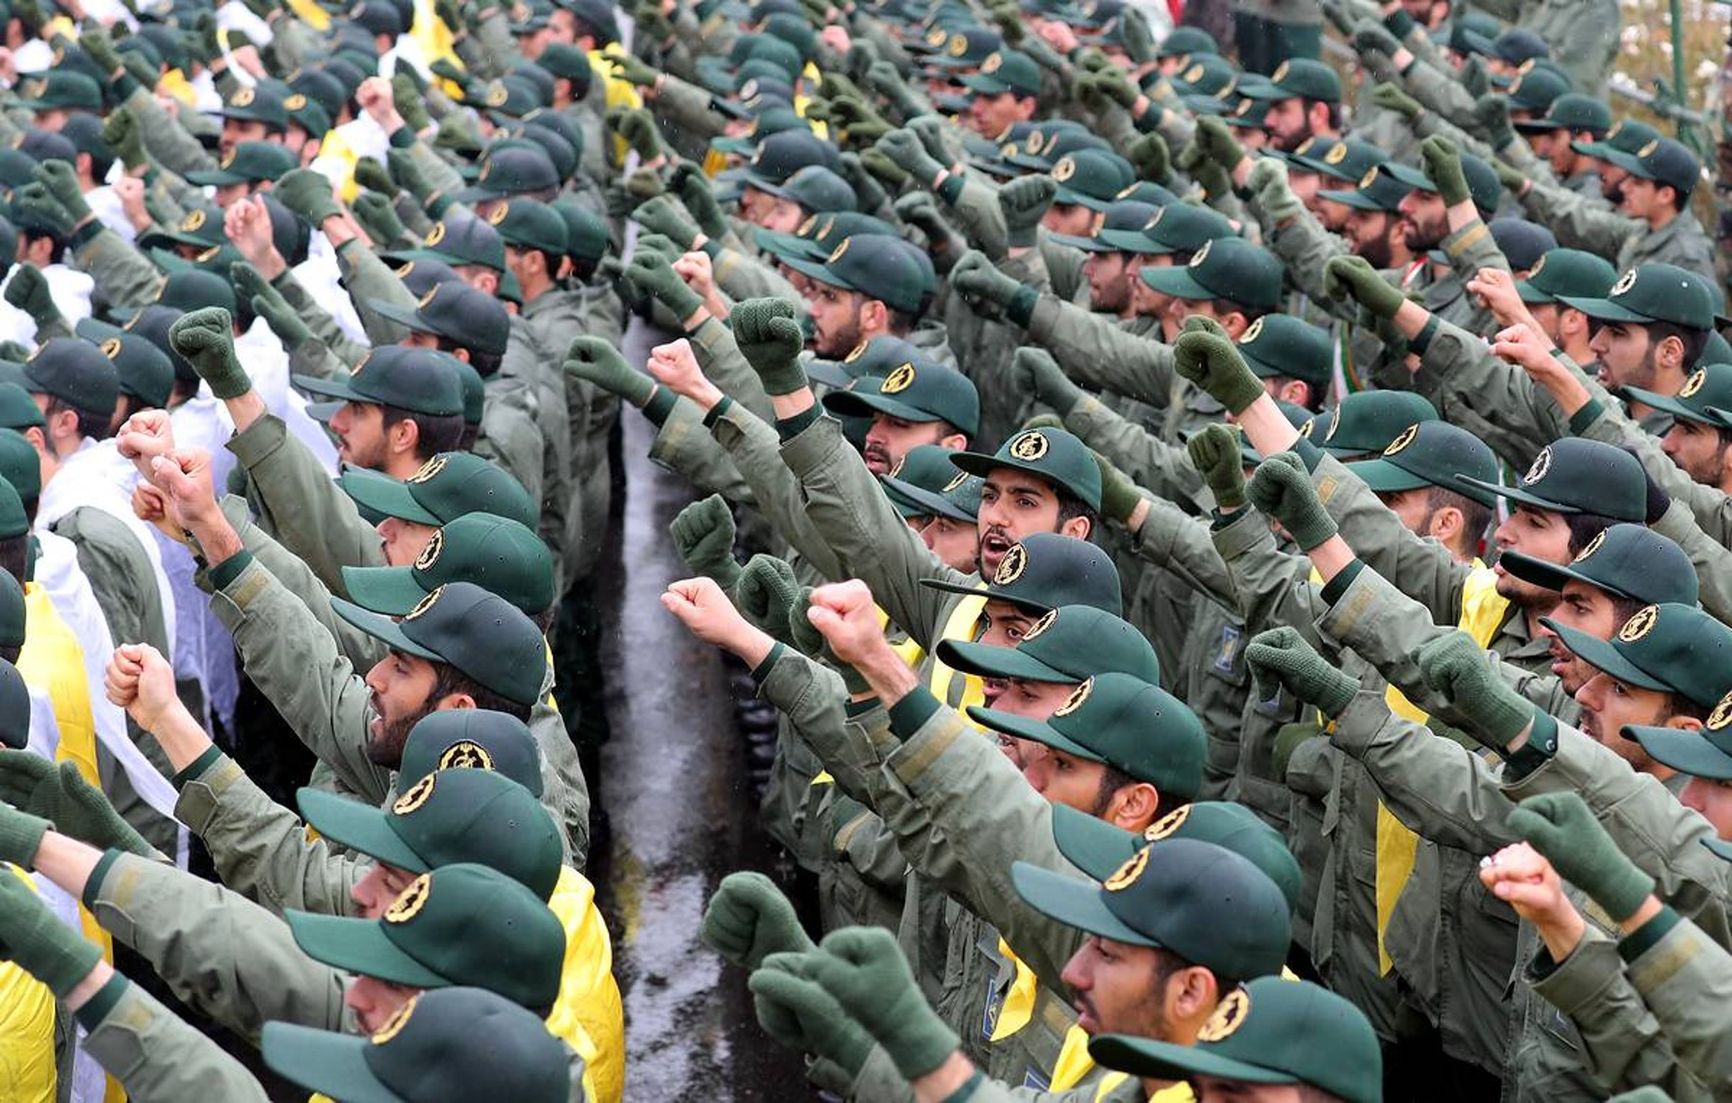 The Islamic Revolutionary Guard Corps (IRGC)  